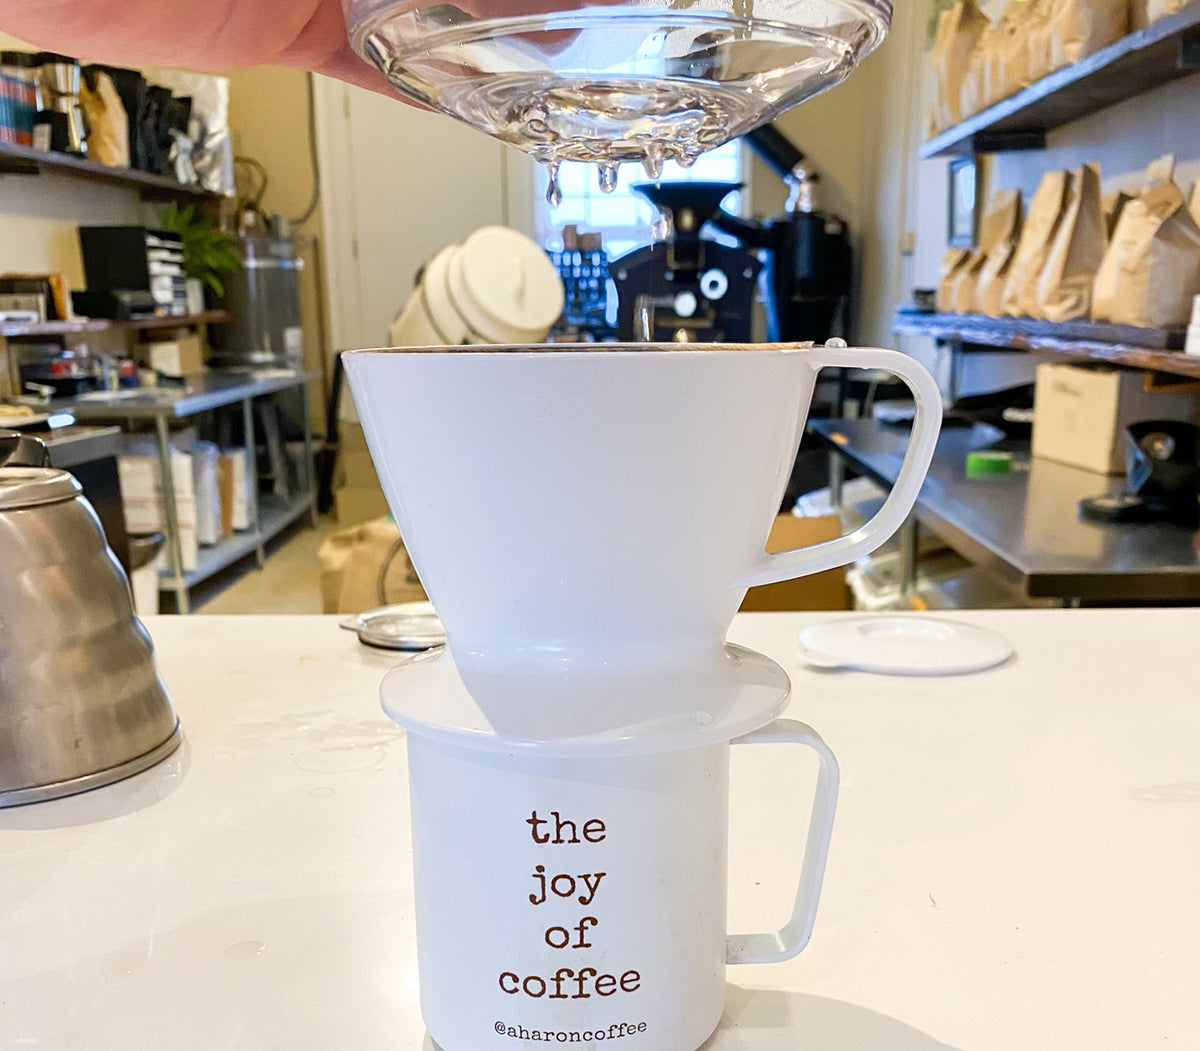  OXO Brew Single Serve Pour-Over Coffee Maker, 12